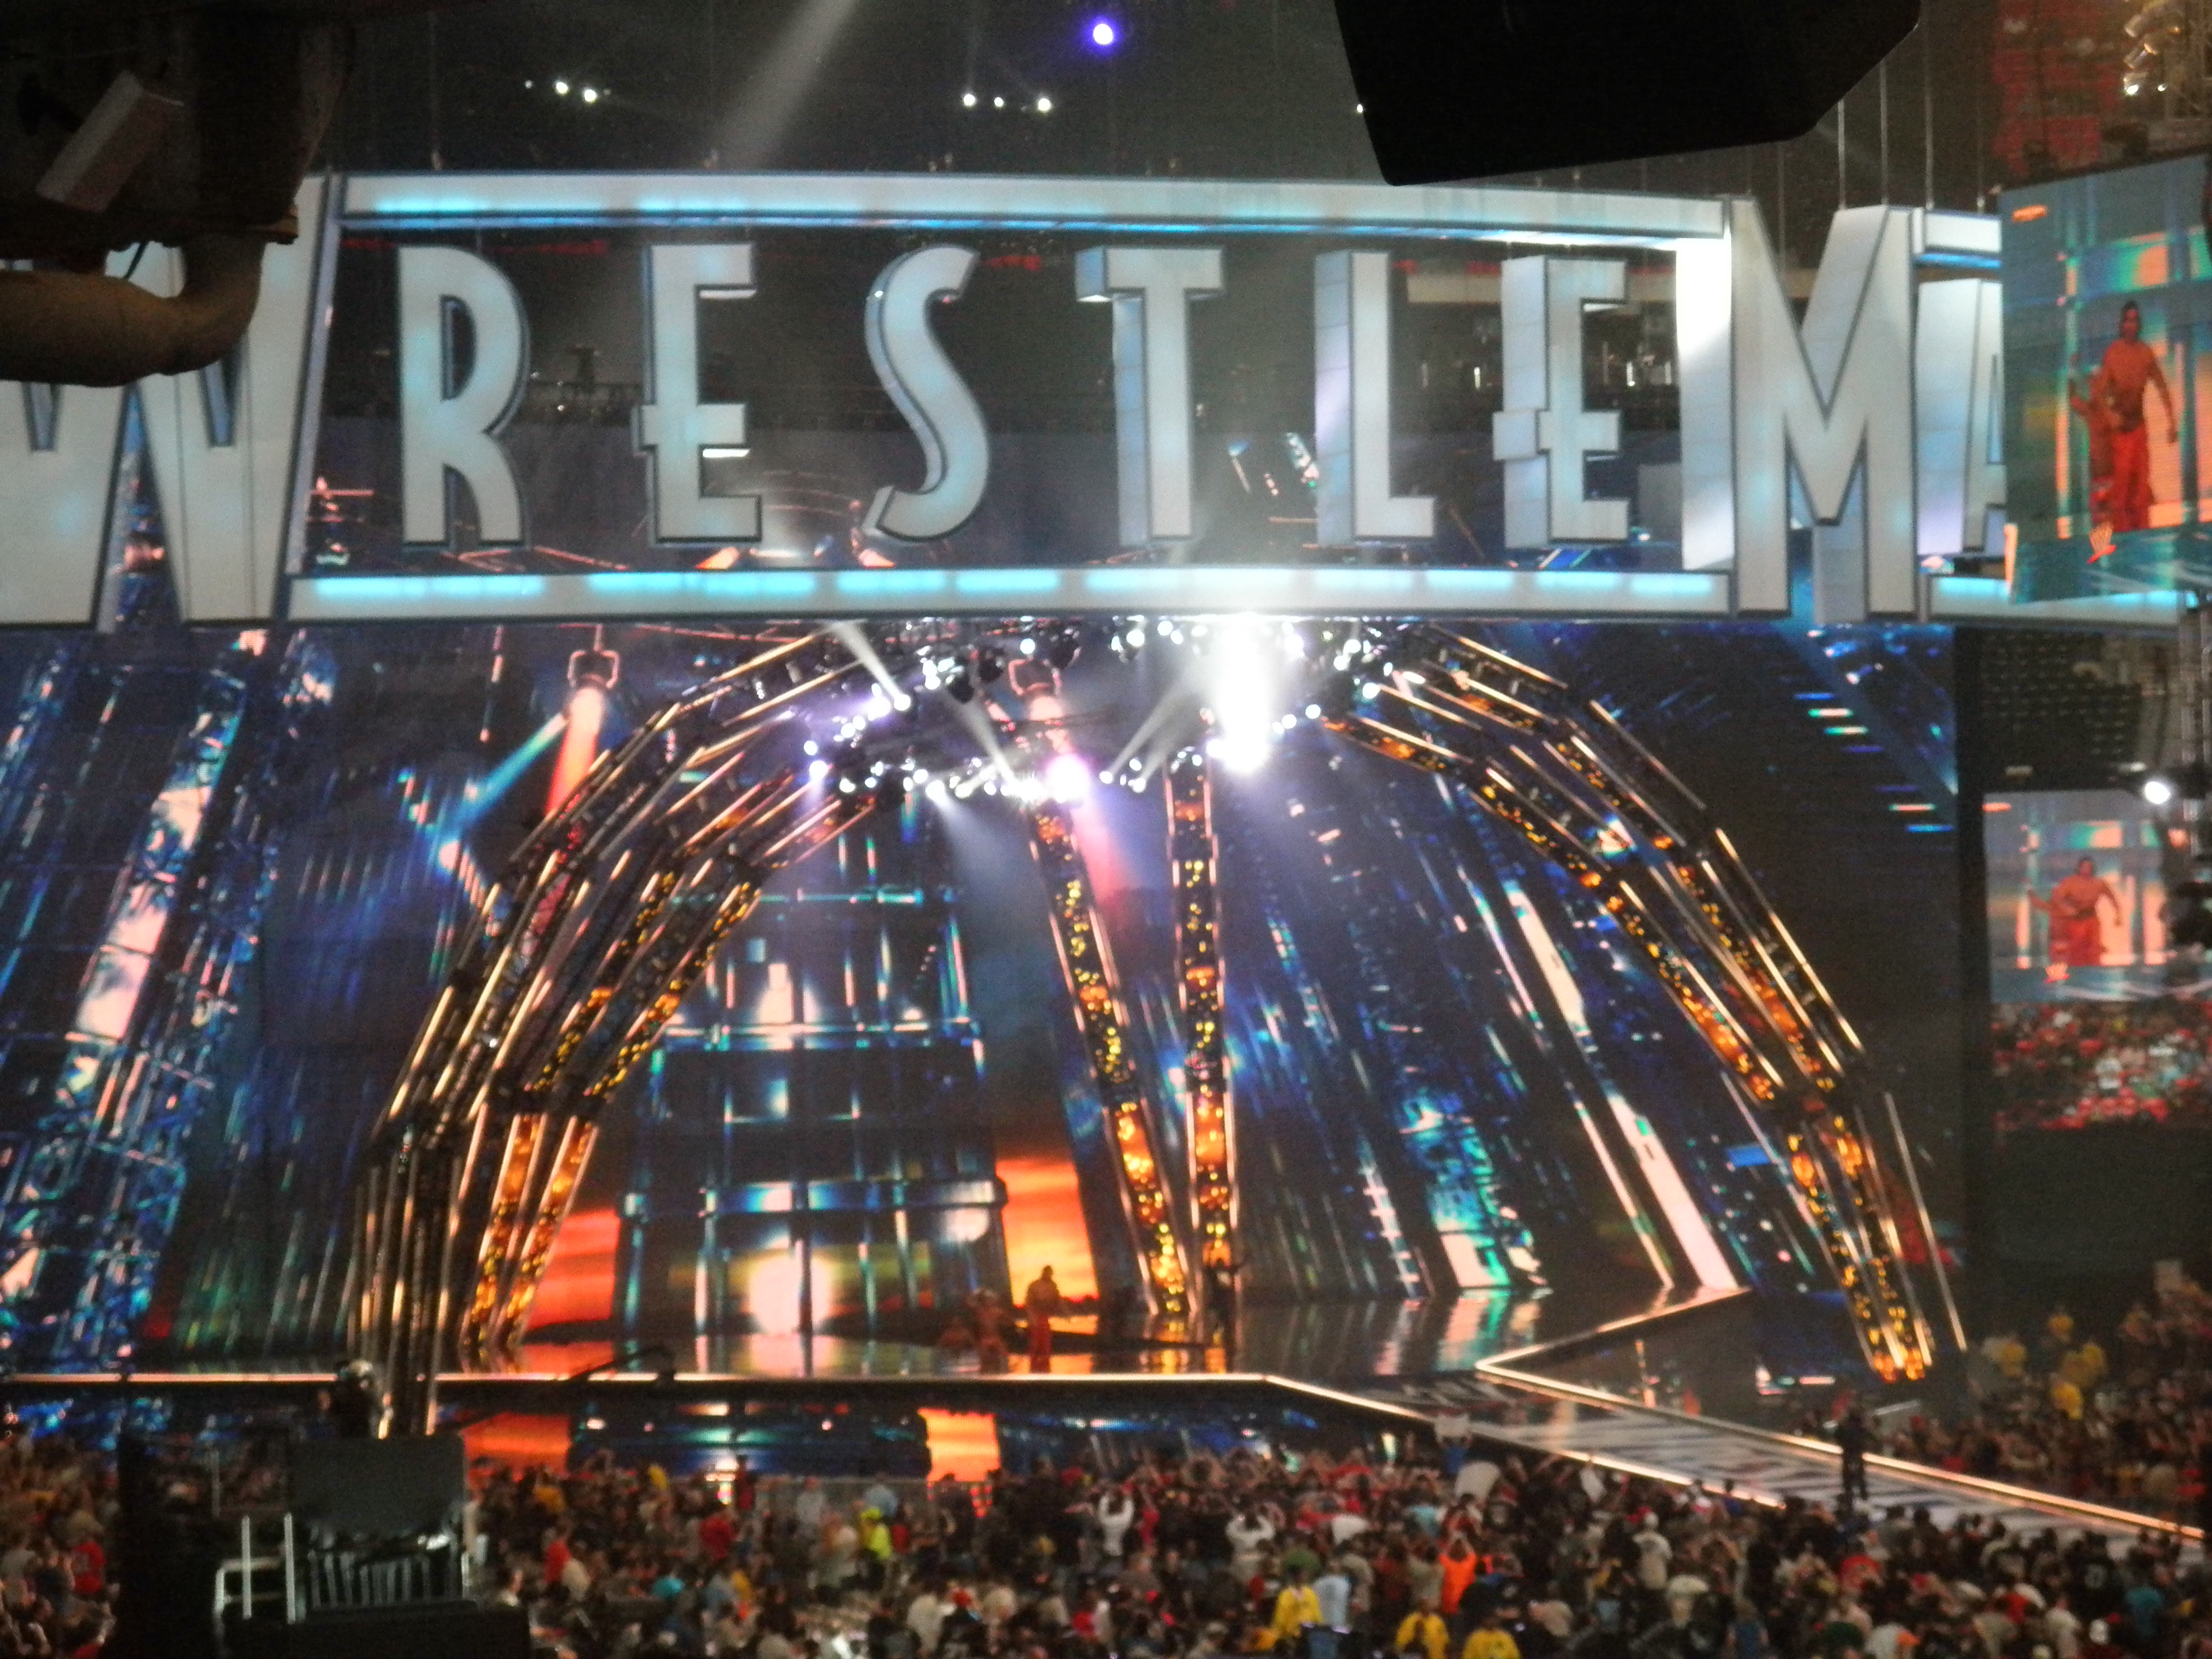 undertaker wrestlemania 27 entrance